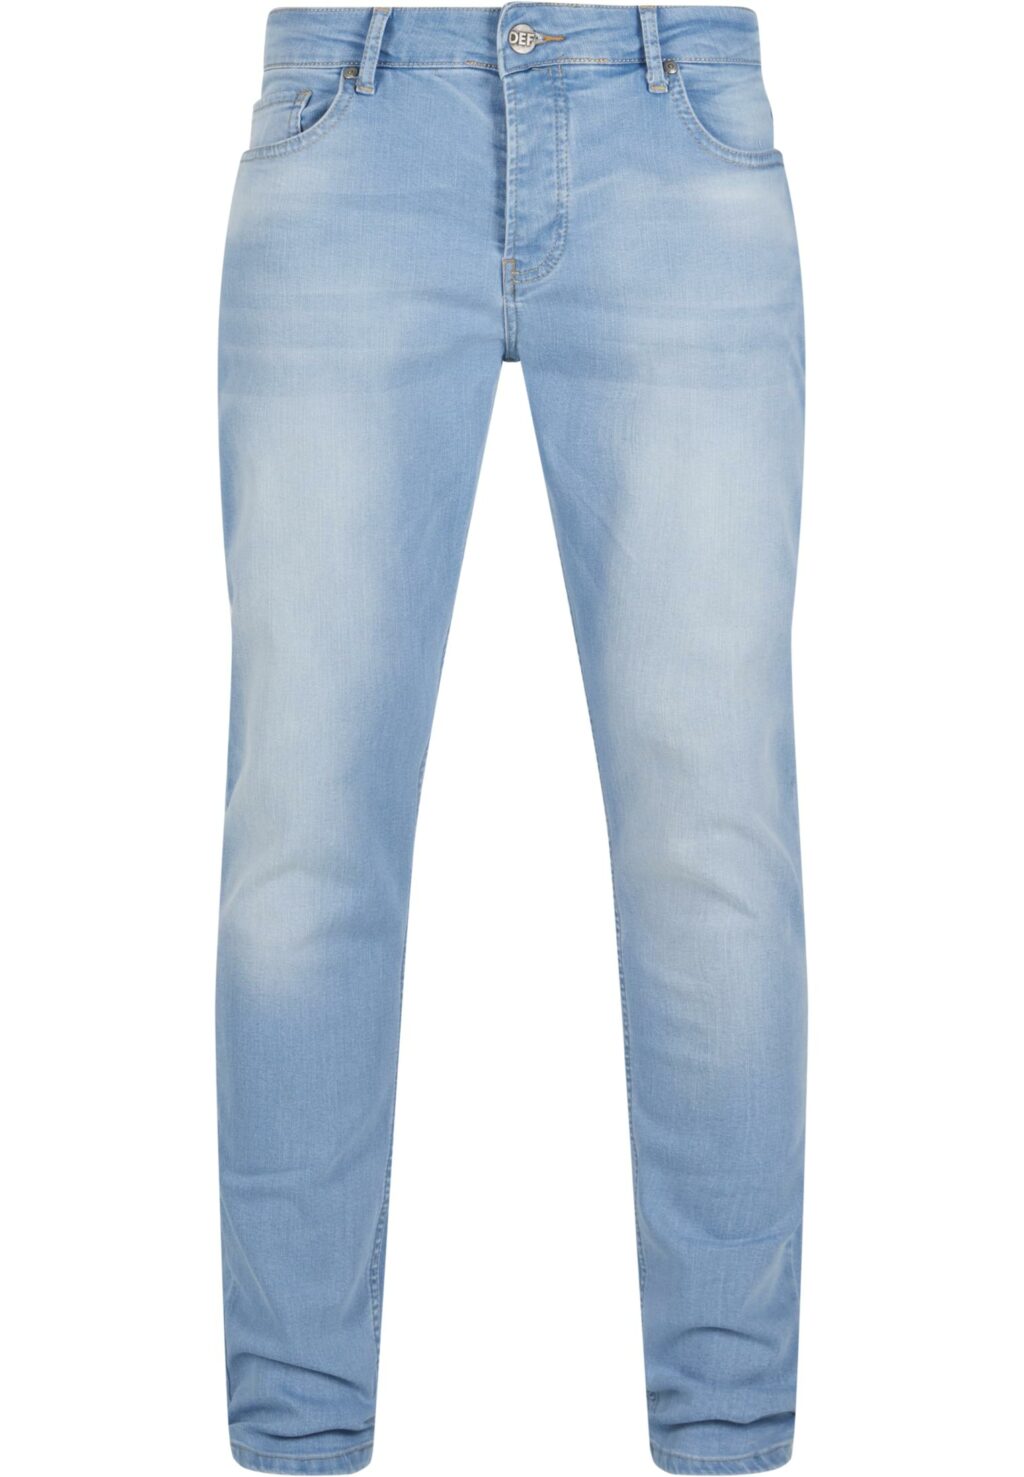 Rislev Slim Fit Jeans MidWash midblue washed DFJS168